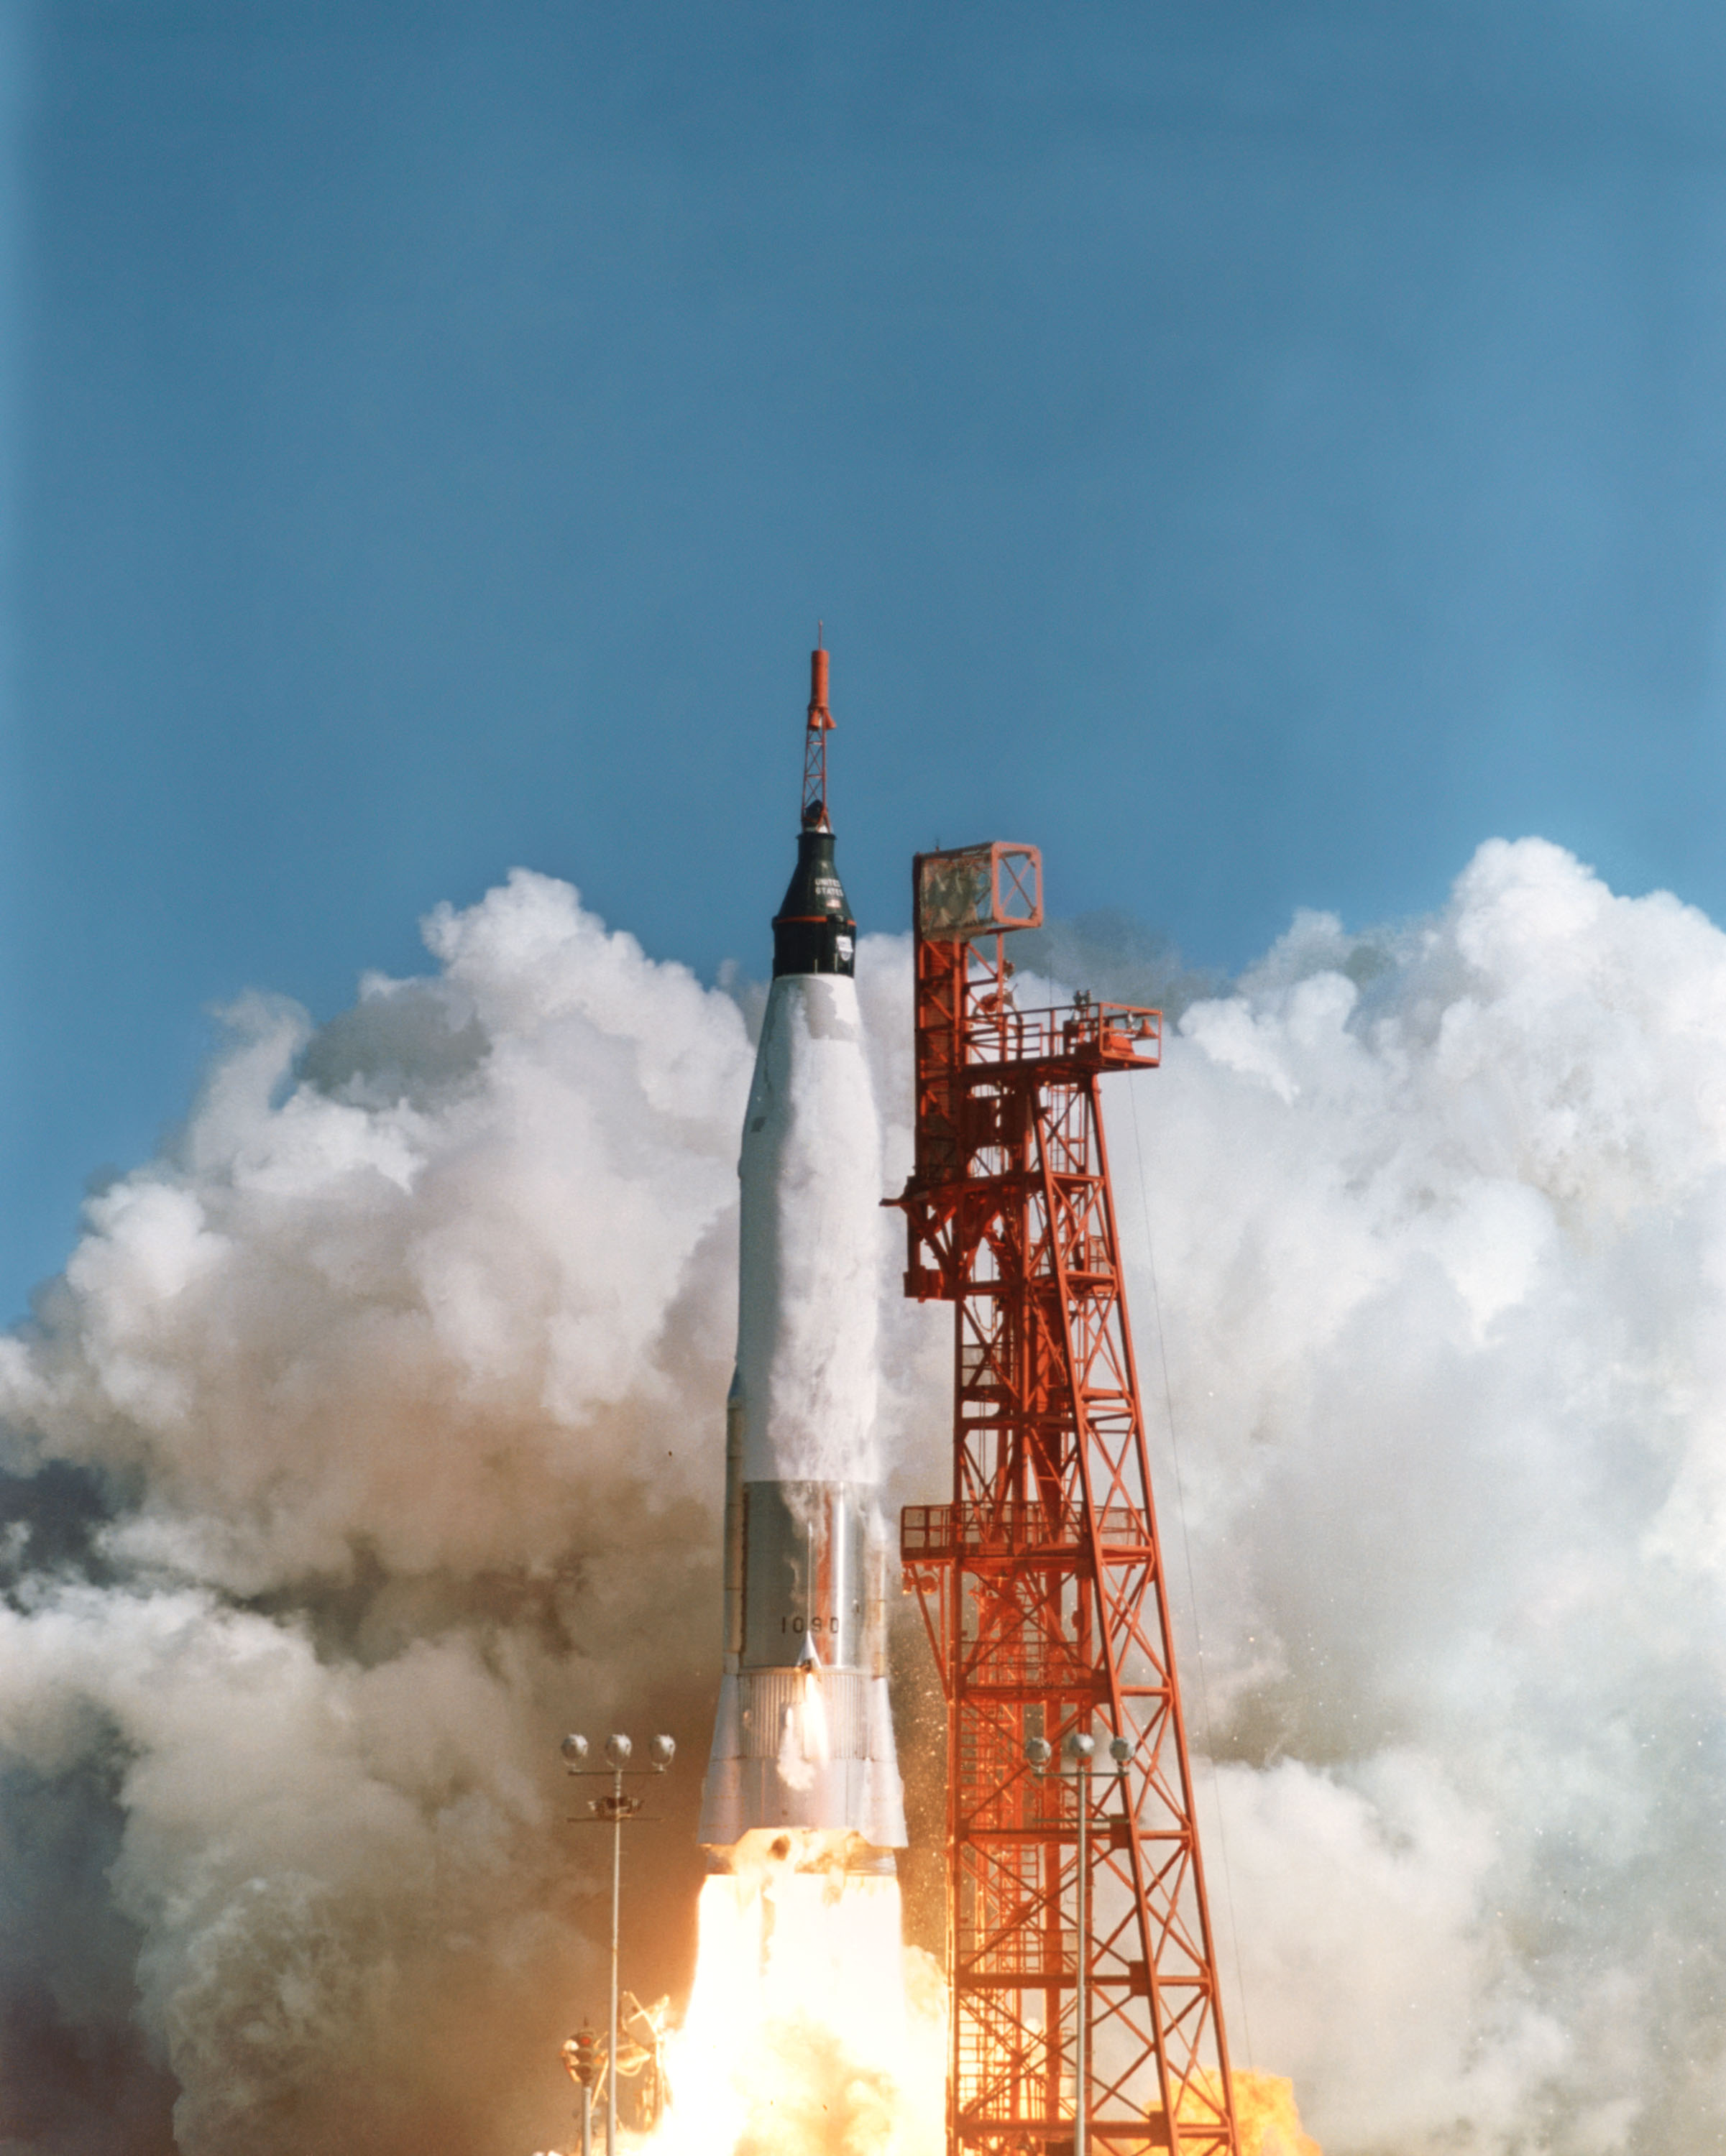 Launch of the Mercury-Atlas 6 mission on Feb. 20, 1962.